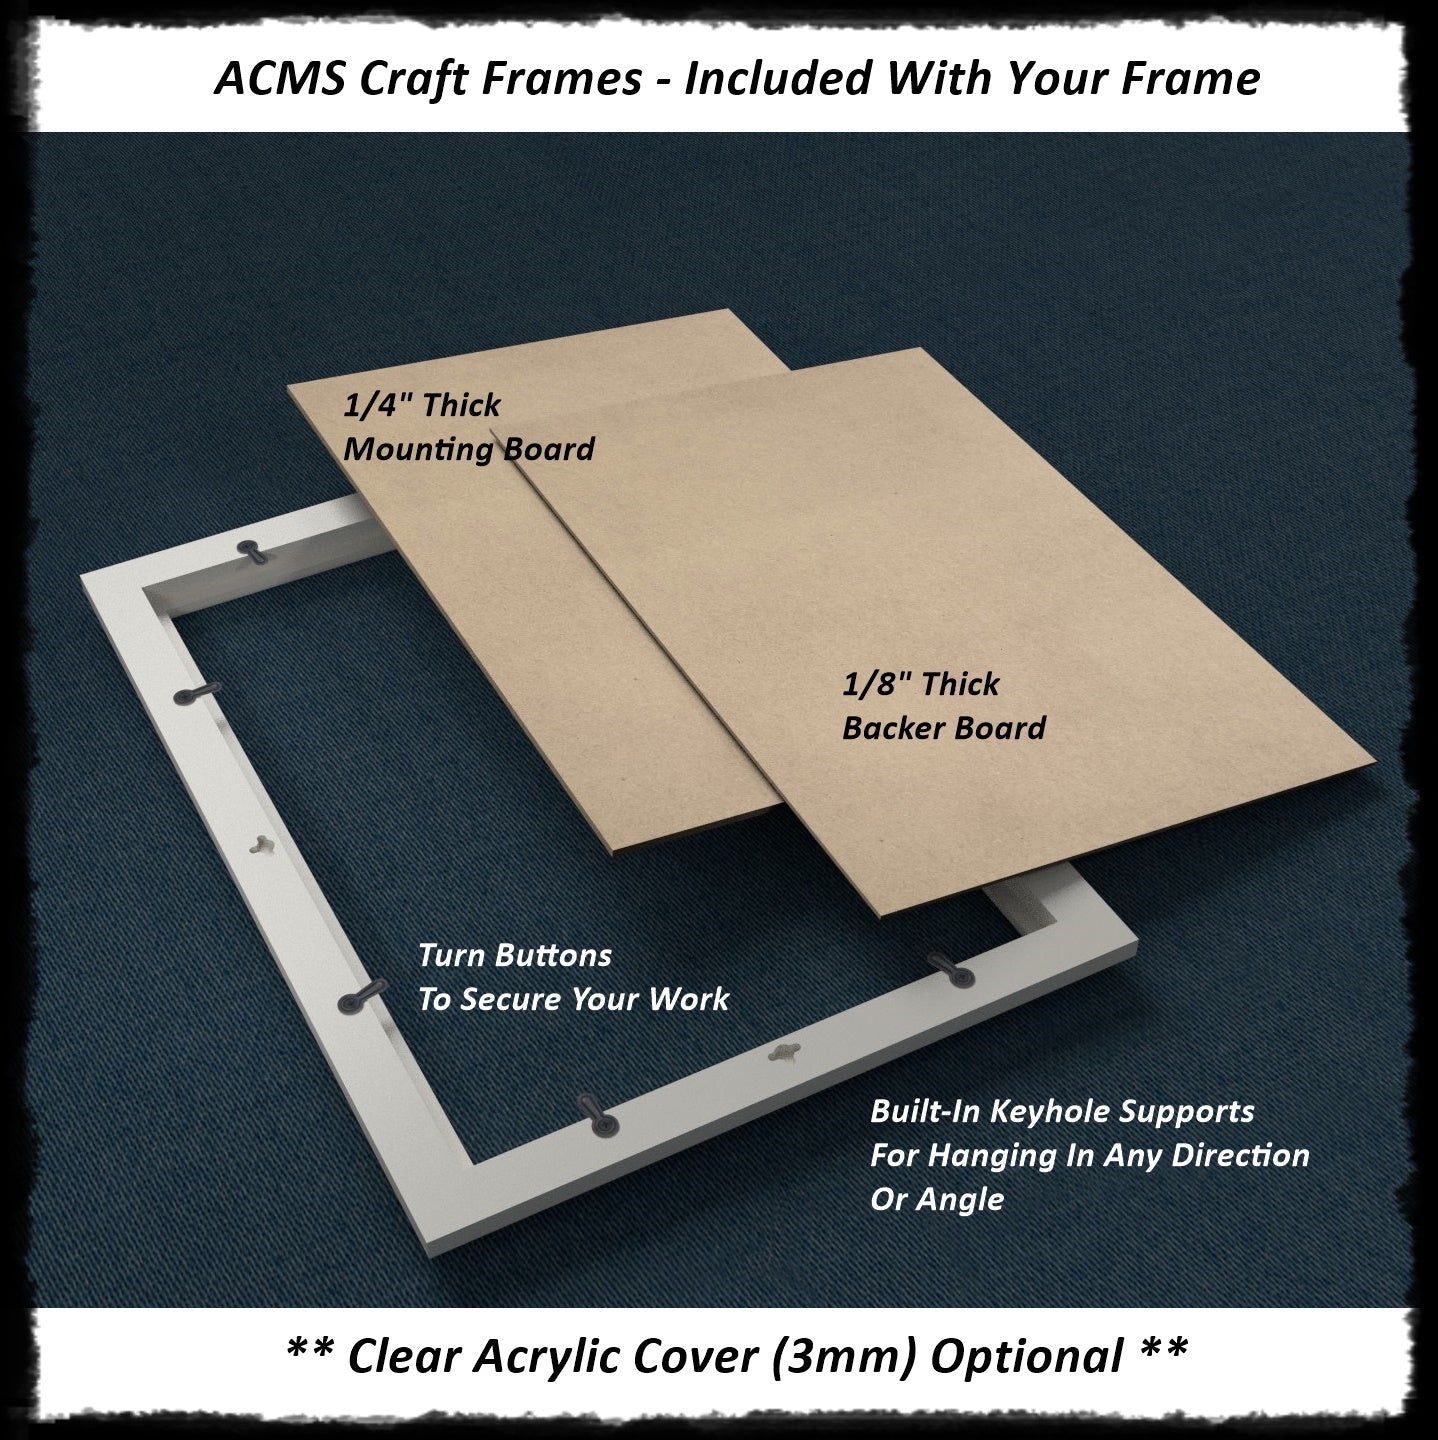 Rectangular Craft Frame - FLAT Profile - 1 1/2" Frame Width - 1" Thick